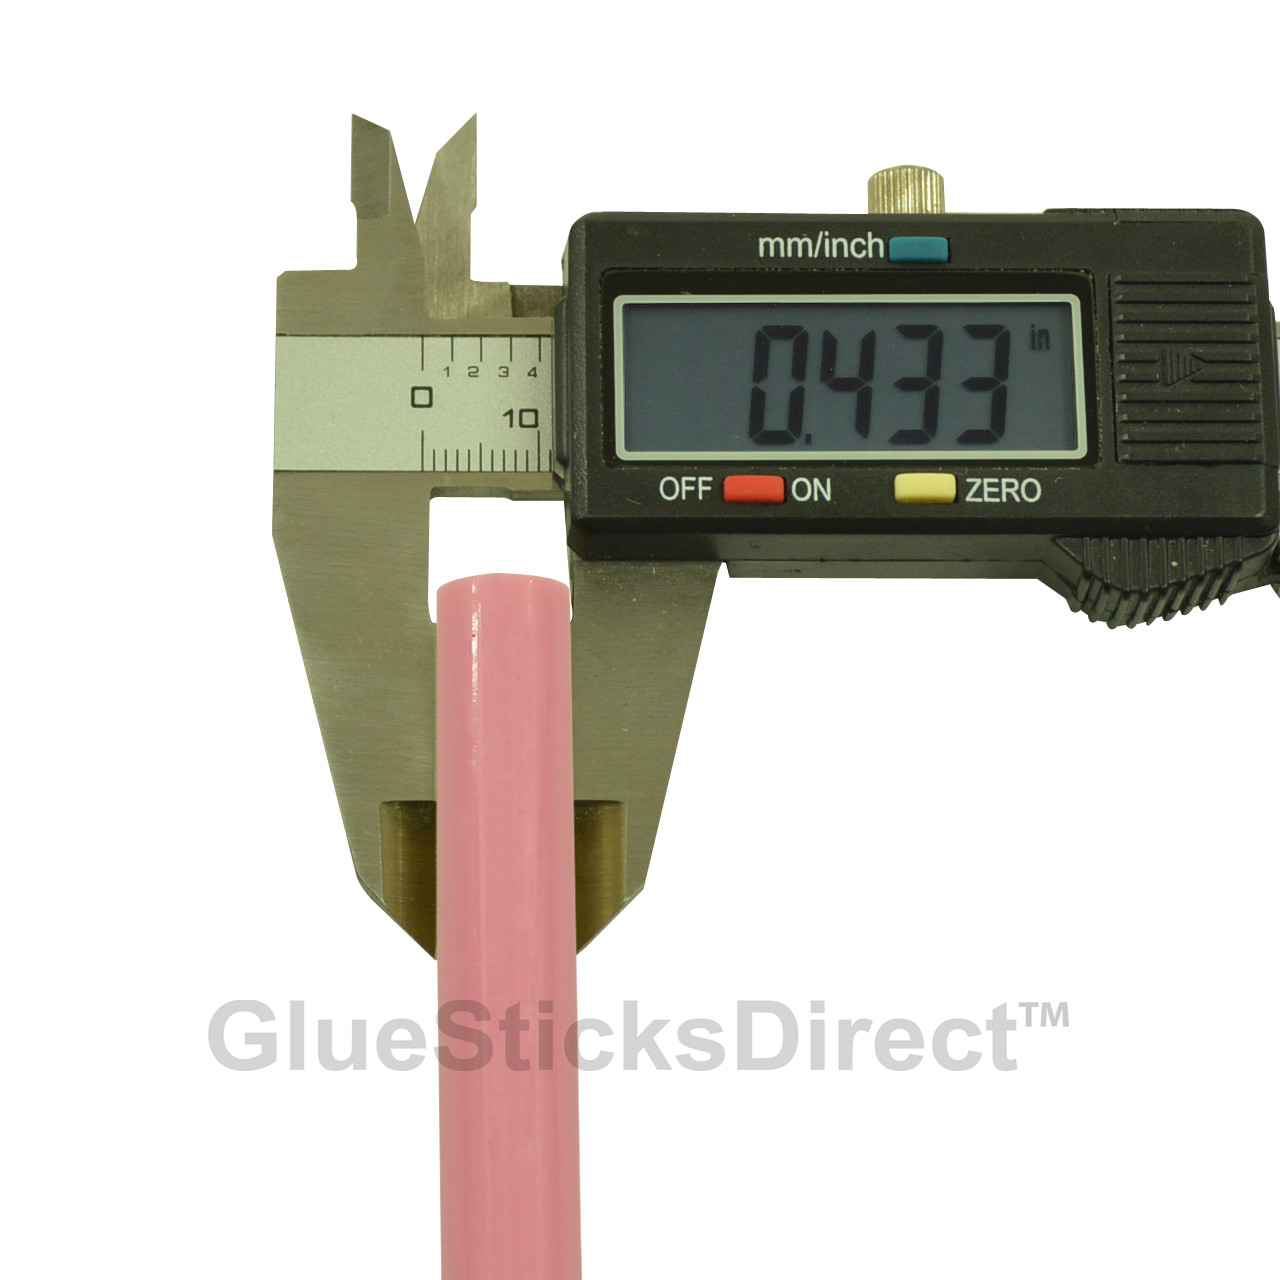 GlueSticksDirect Pink Colored Glue Sticks 7/16" X 4" 5 lbs